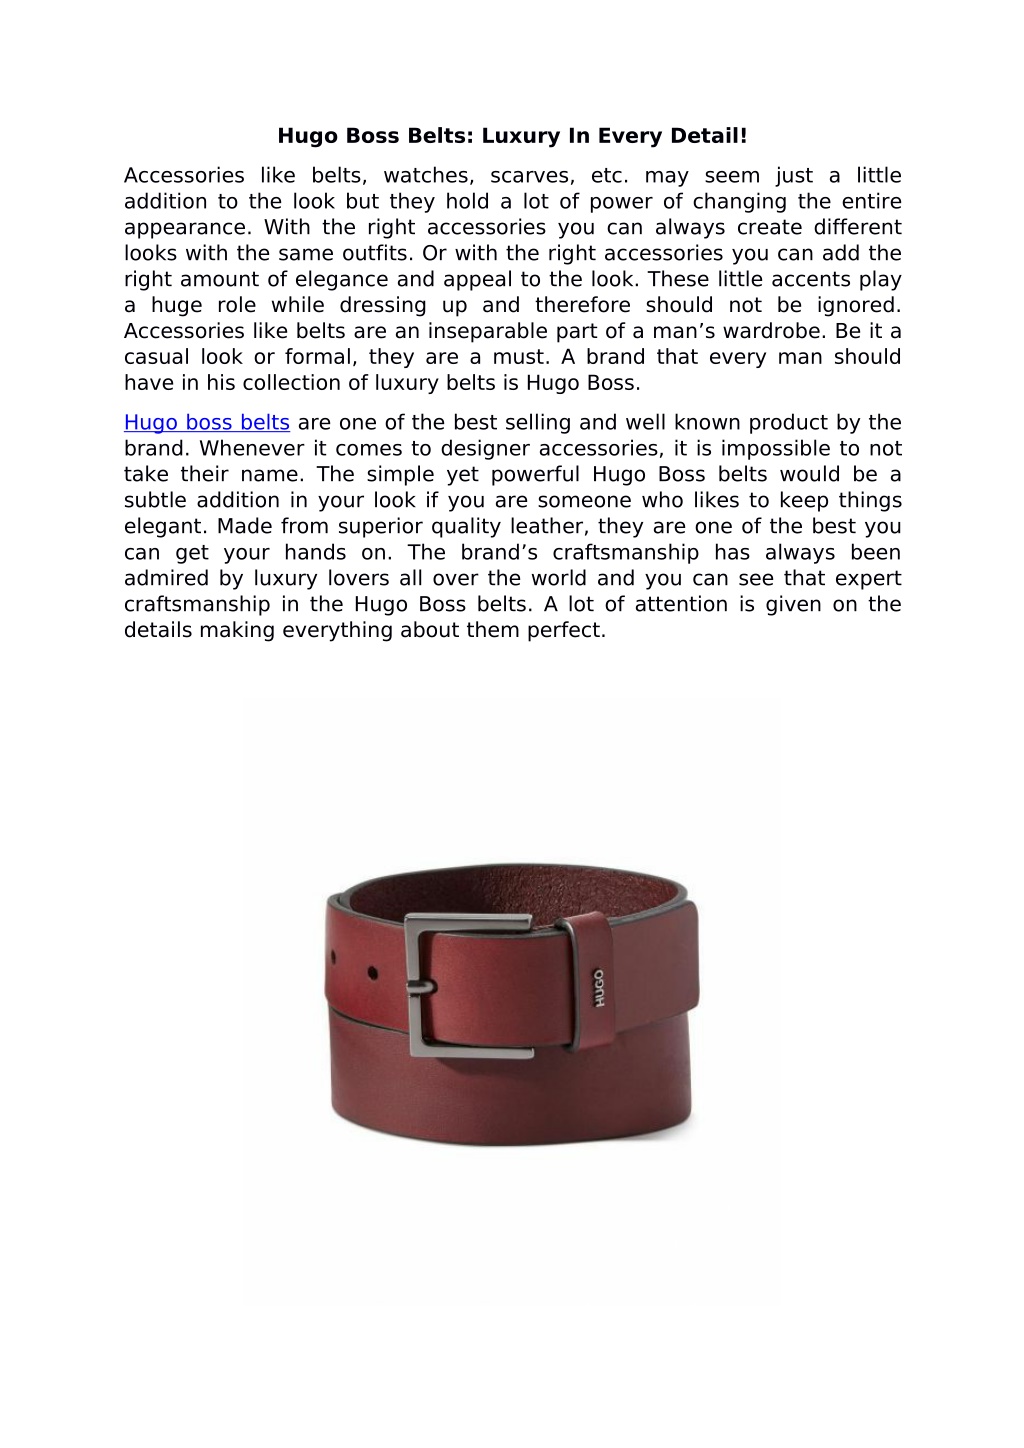 PPT - Hugo Boss Belts: Luxury In Every Detail! PowerPoint Presentation ...